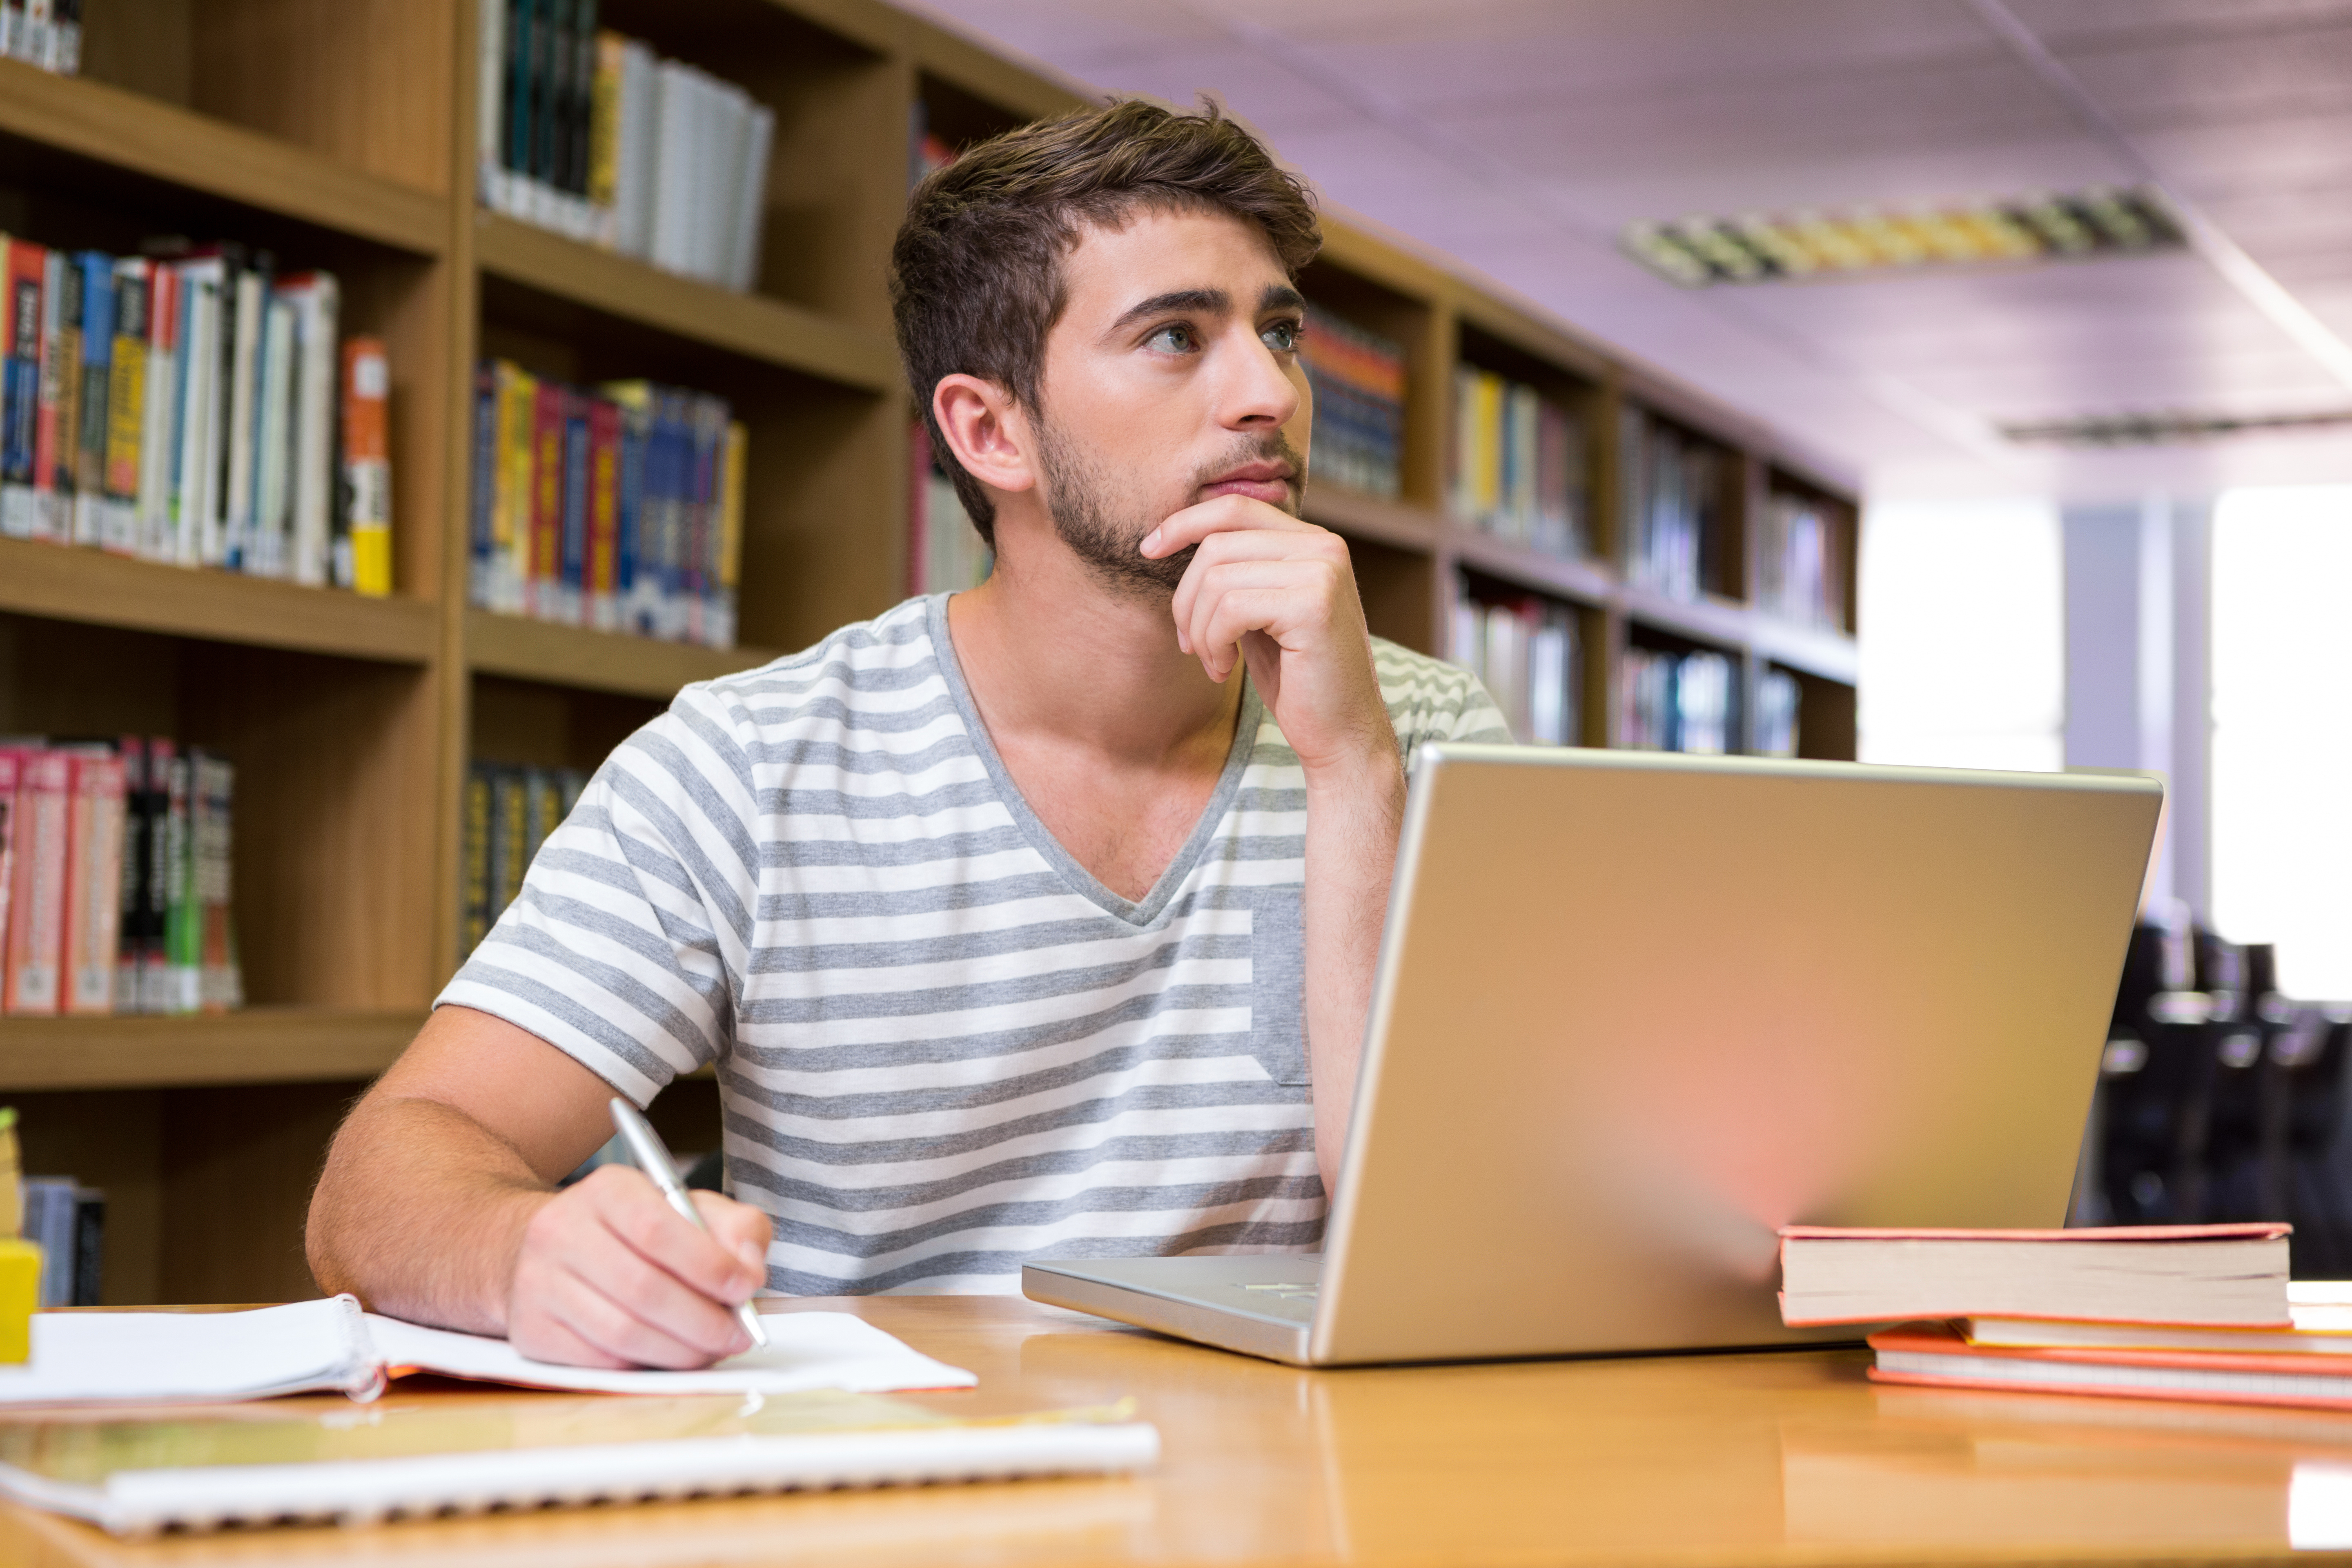 Ielts universities. Учеба в библиотеке. Студент с ноутбуком. Мужчина в библиотеке.